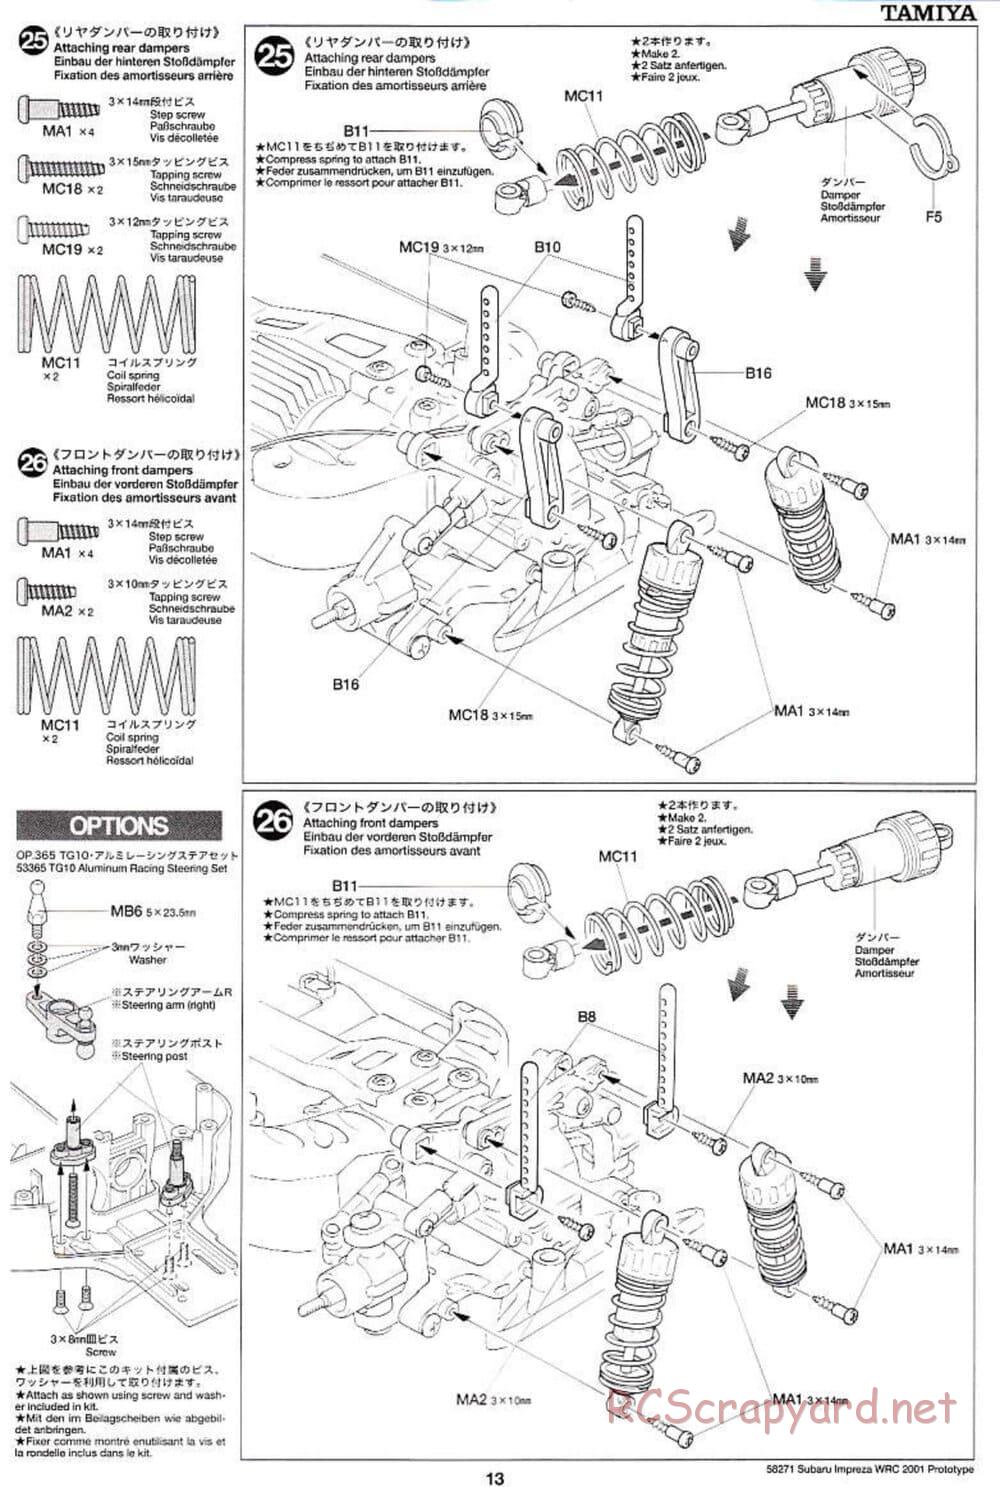 Tamiya - Subaru Impreza WRC 2001 Prototype - TB-01 Chassis - Manual - Page 13